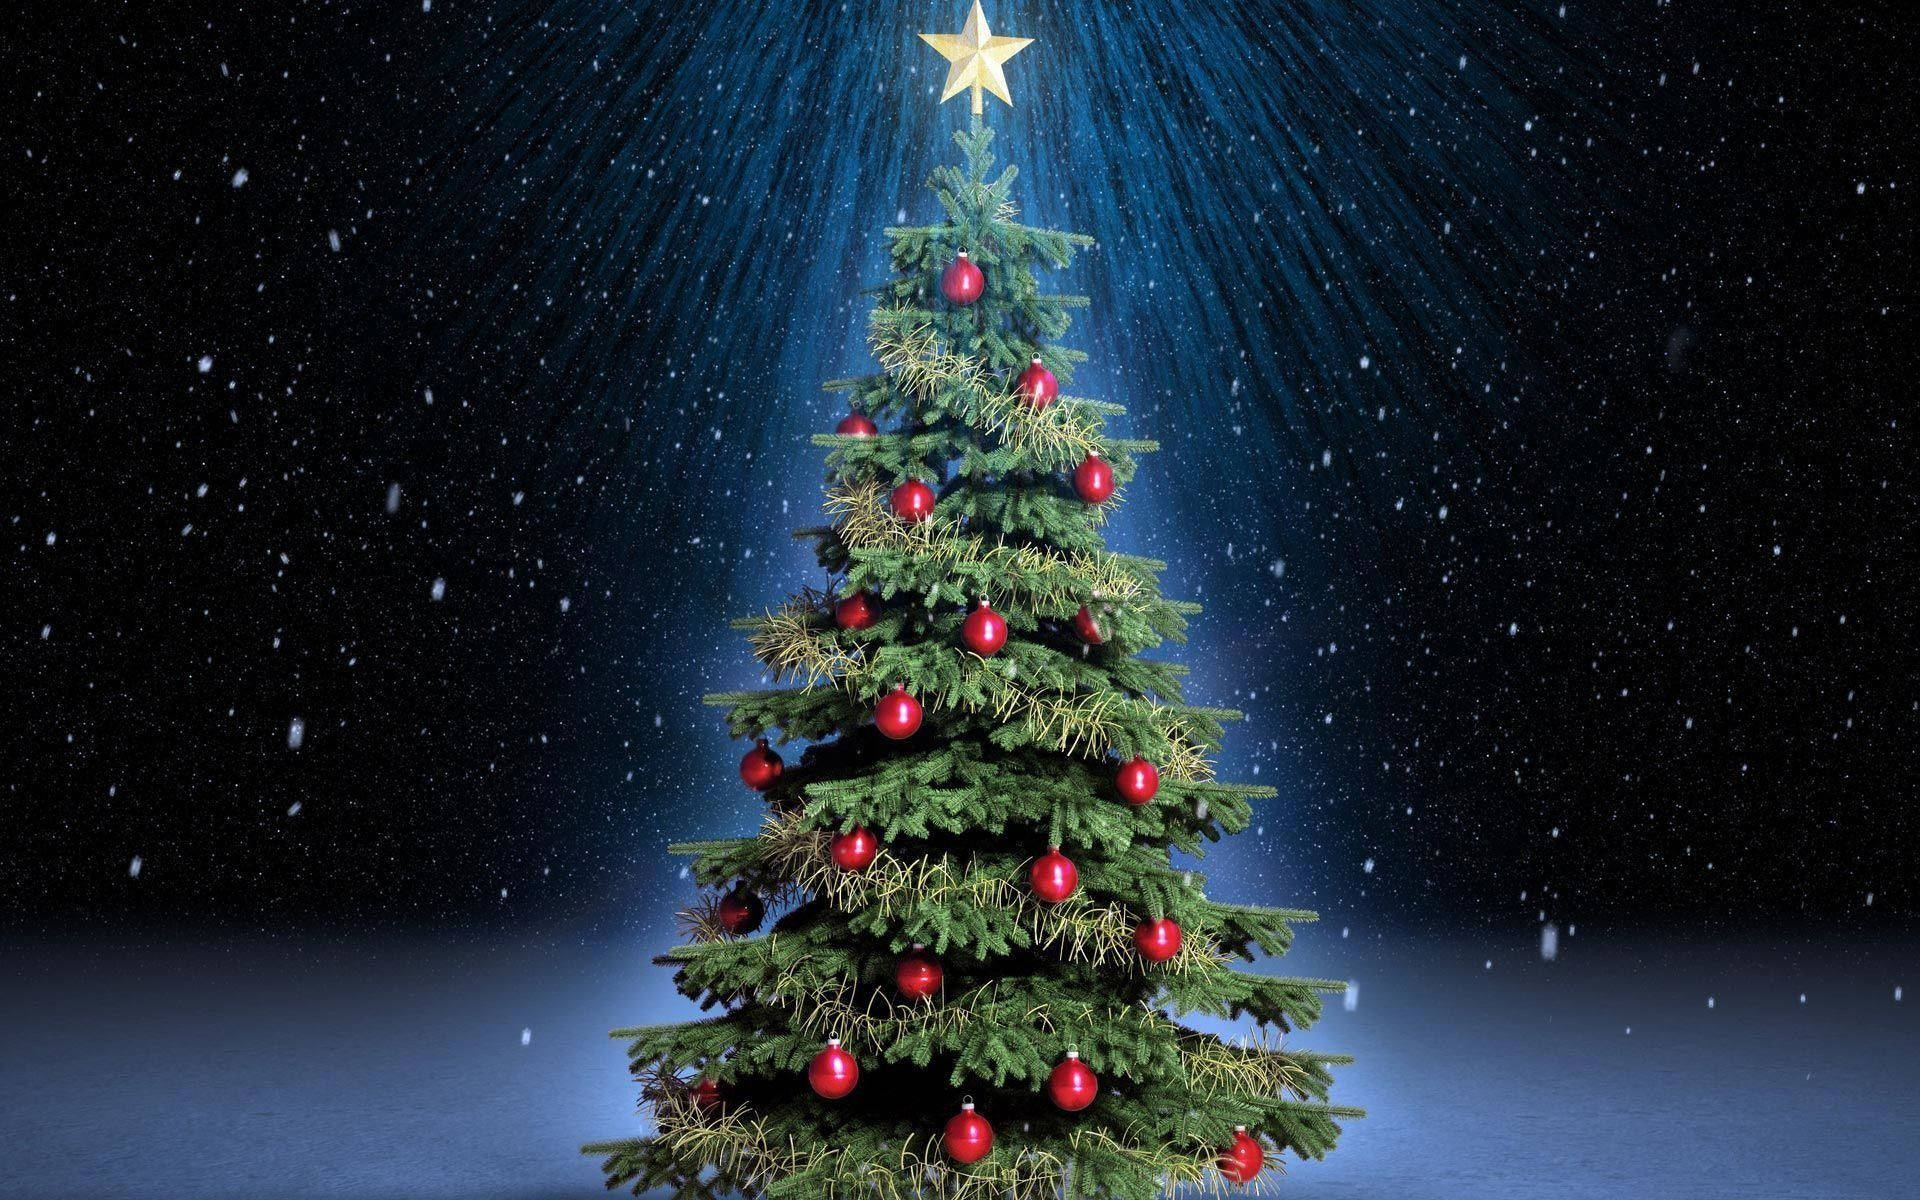 Free Christmas Tree Wallpaper Downloads, [400+] Christmas Tree Wallpapers  for FREE 